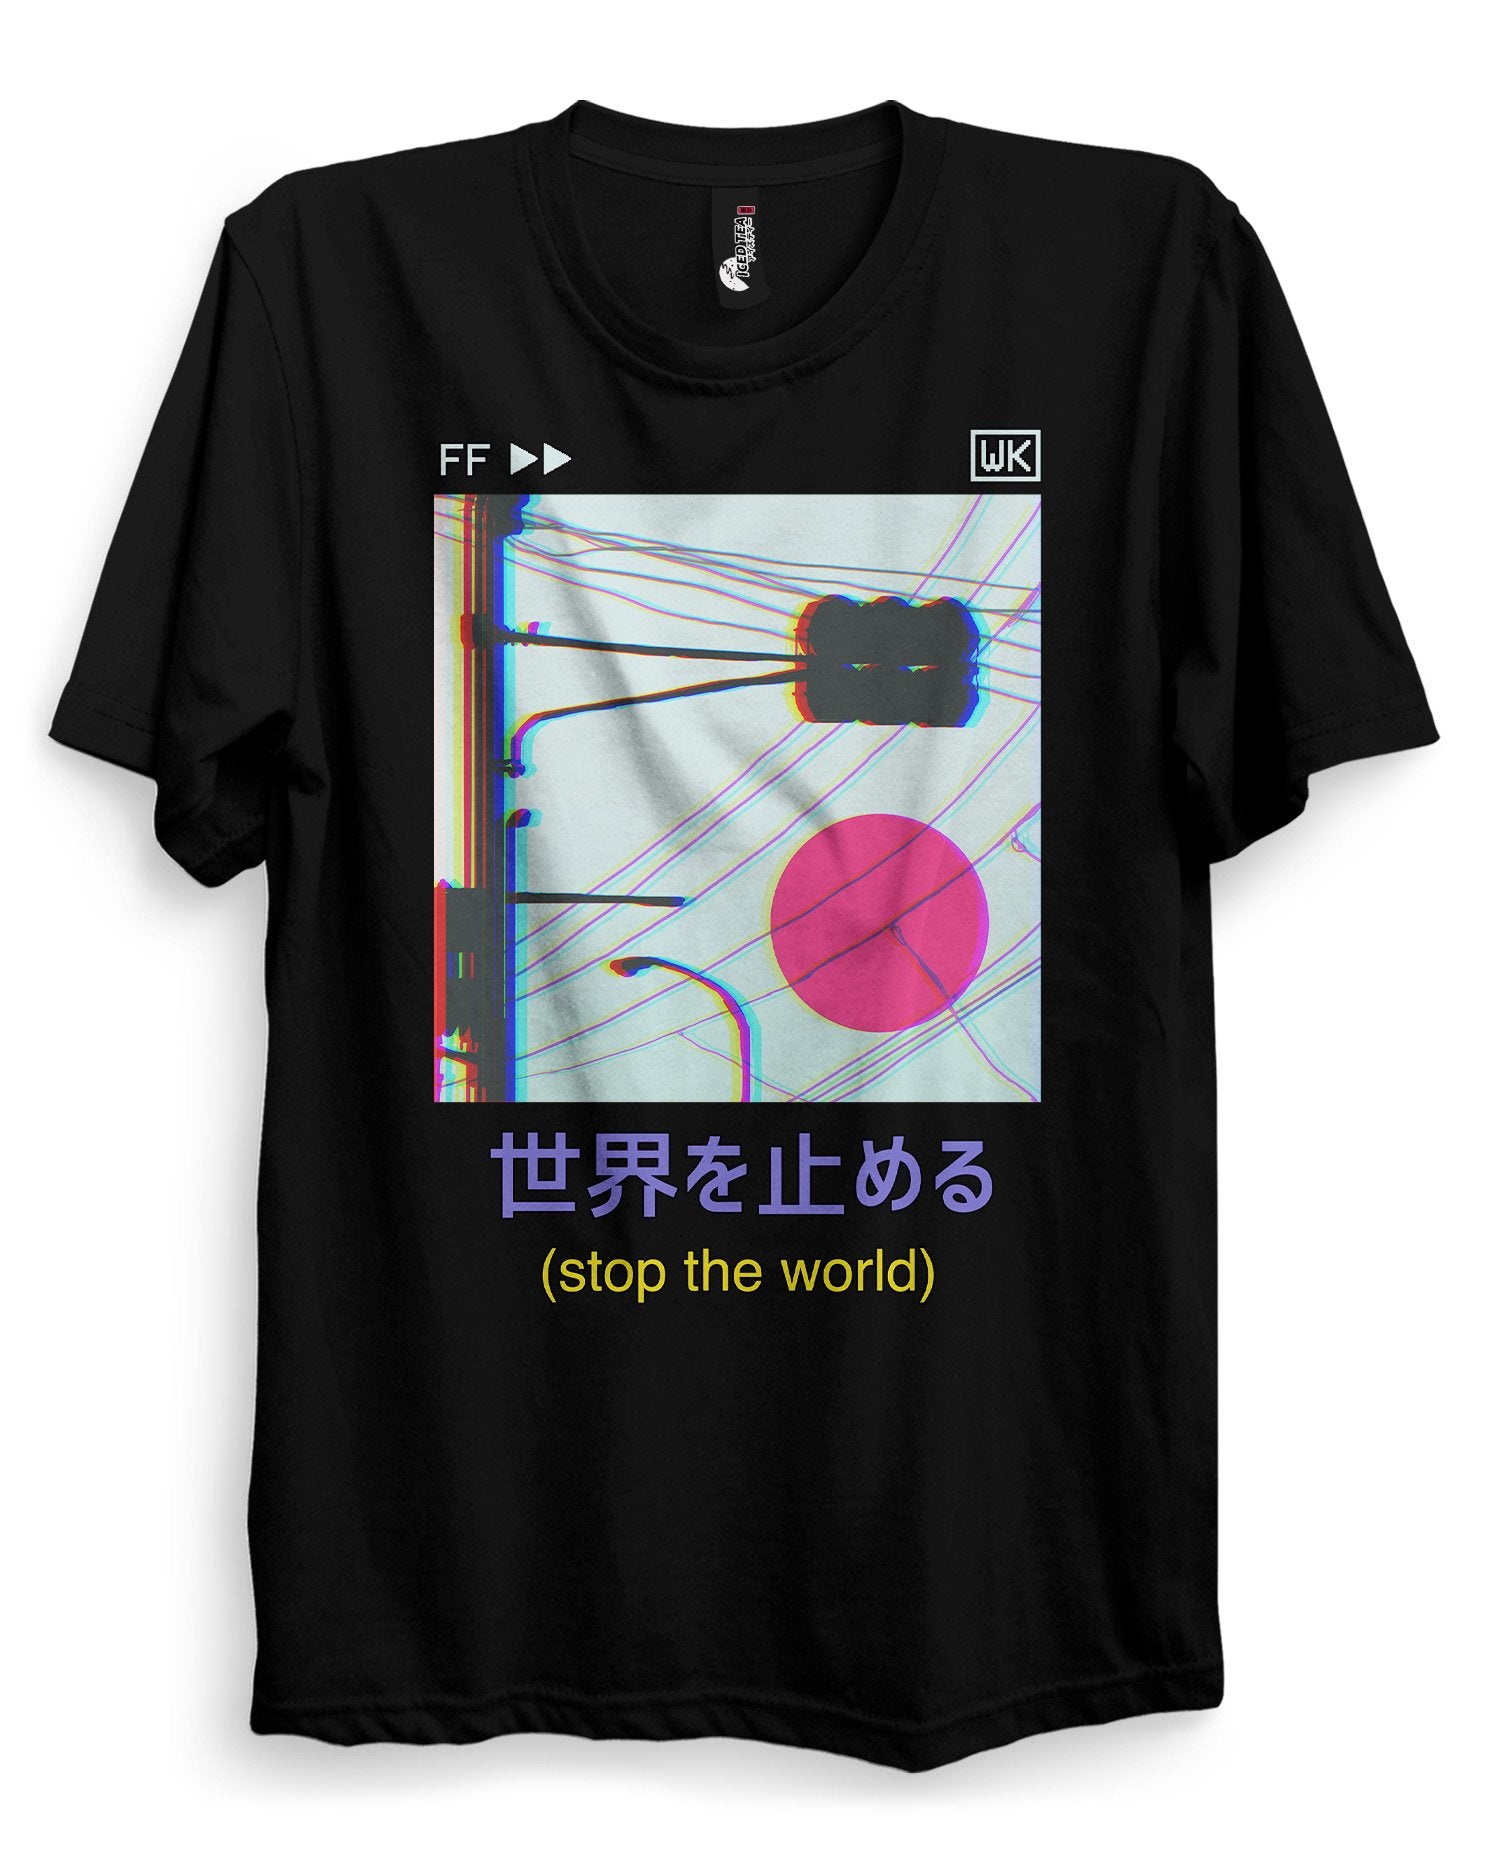 Stop the world - Vaporwave T-Shirt - Dark Aesthetics and Anime Clothing Streetwear